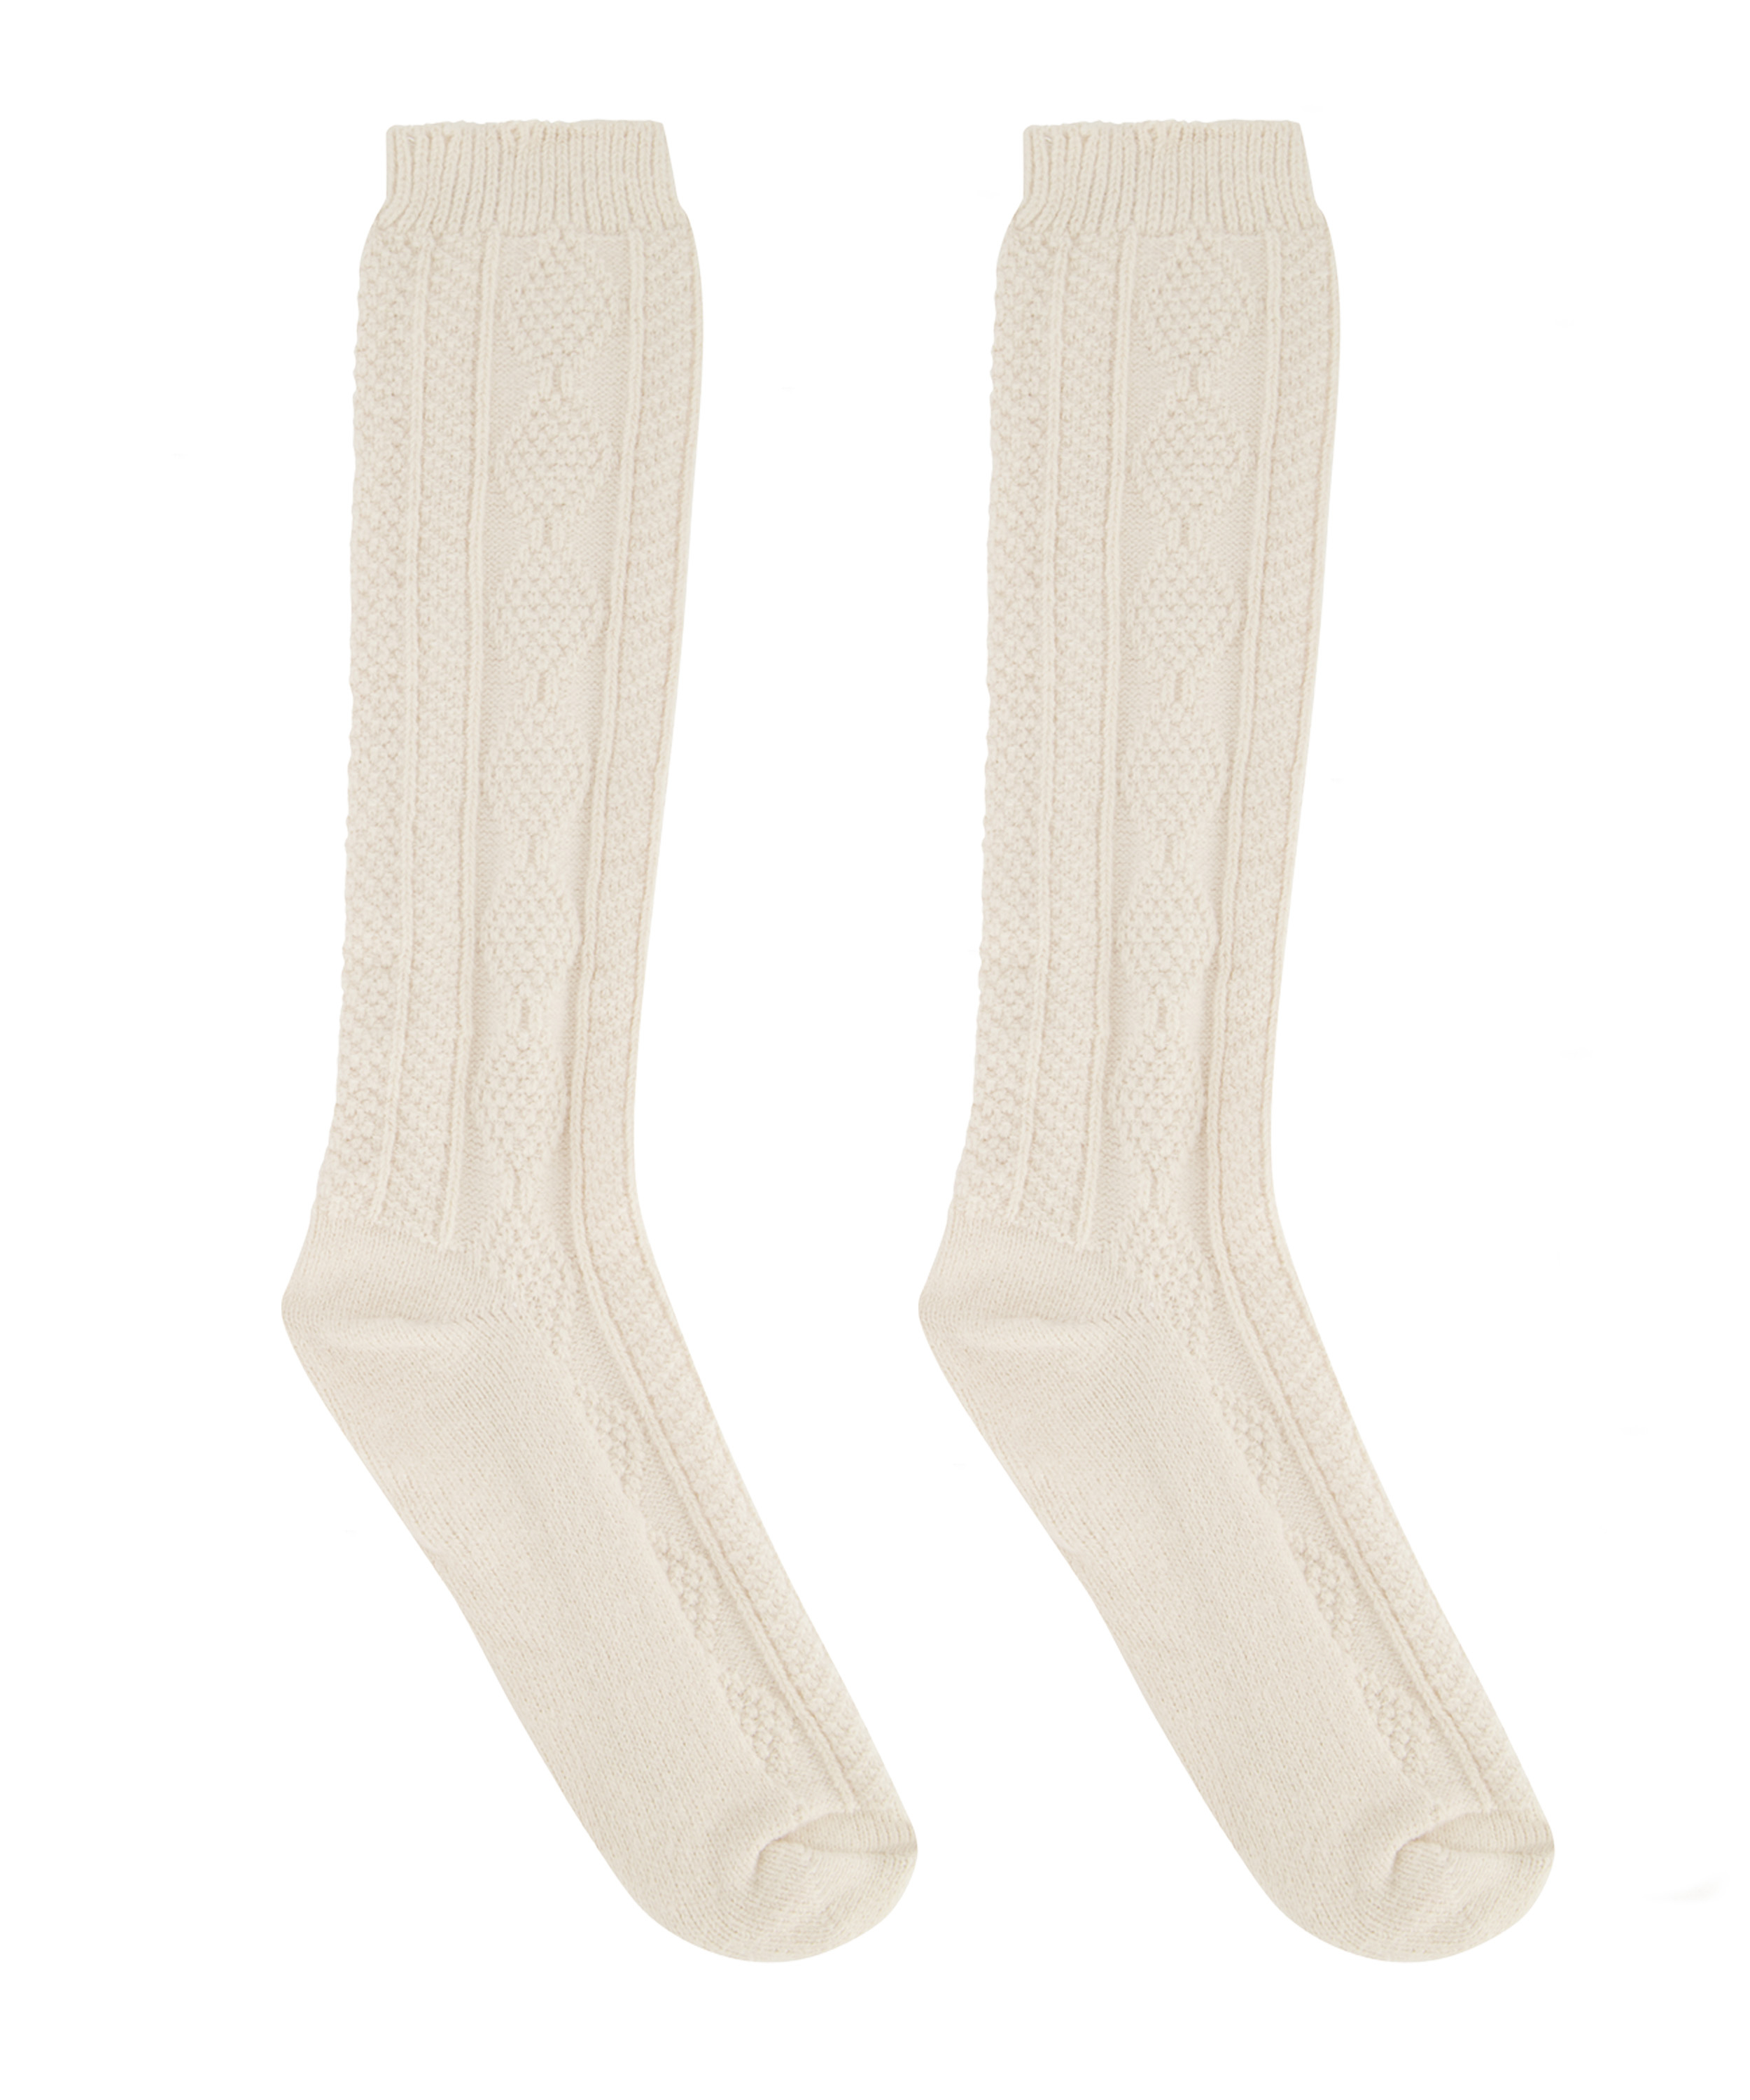 Varme sokker Myla, hvid, main